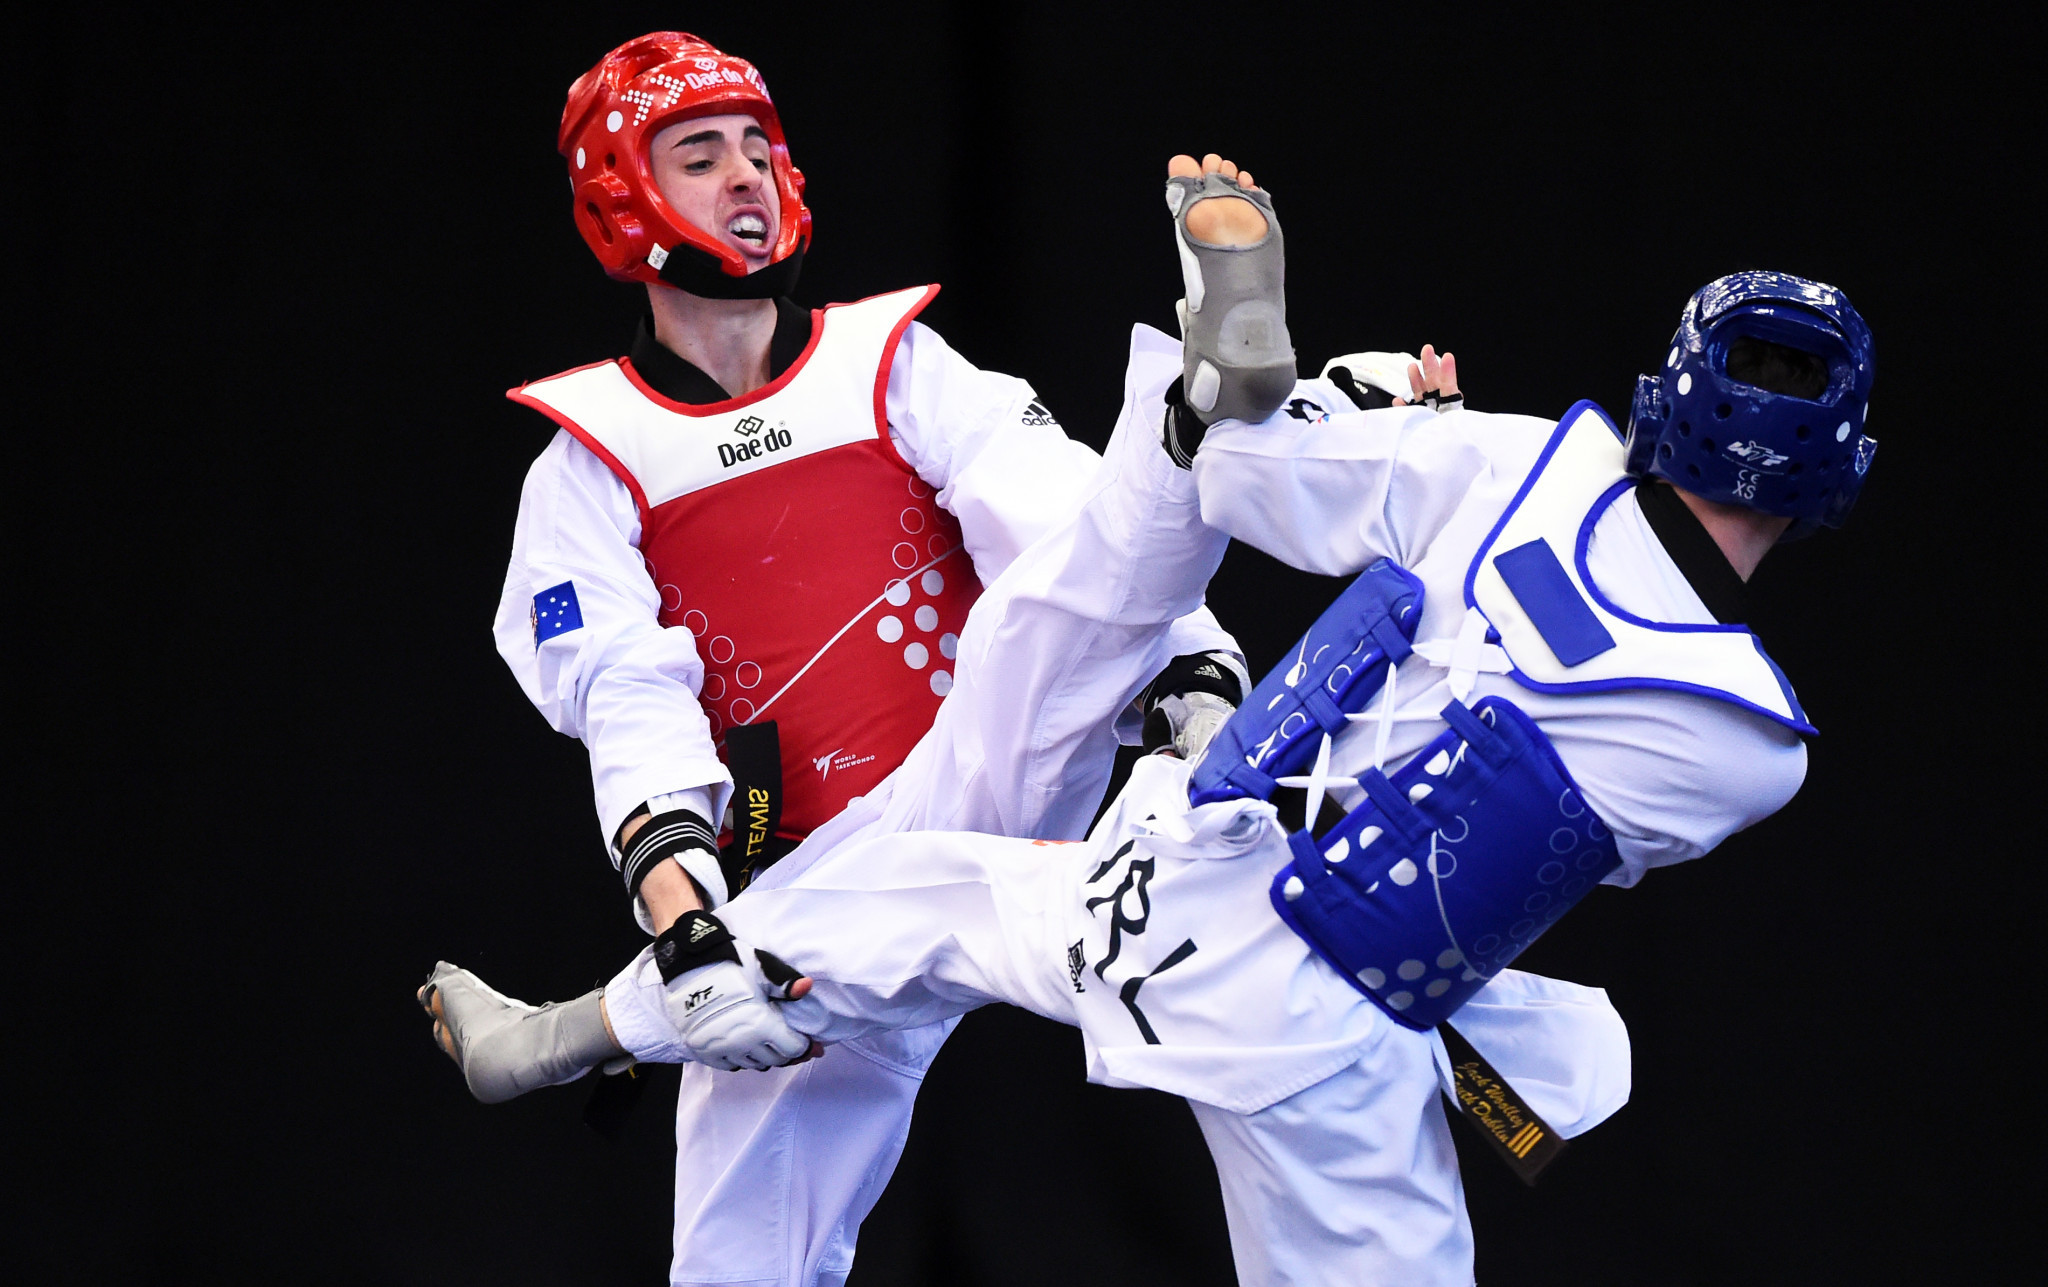 Bailey Lewis was part of Australian Taekwondo's scheme to inspire children ©Getty Images